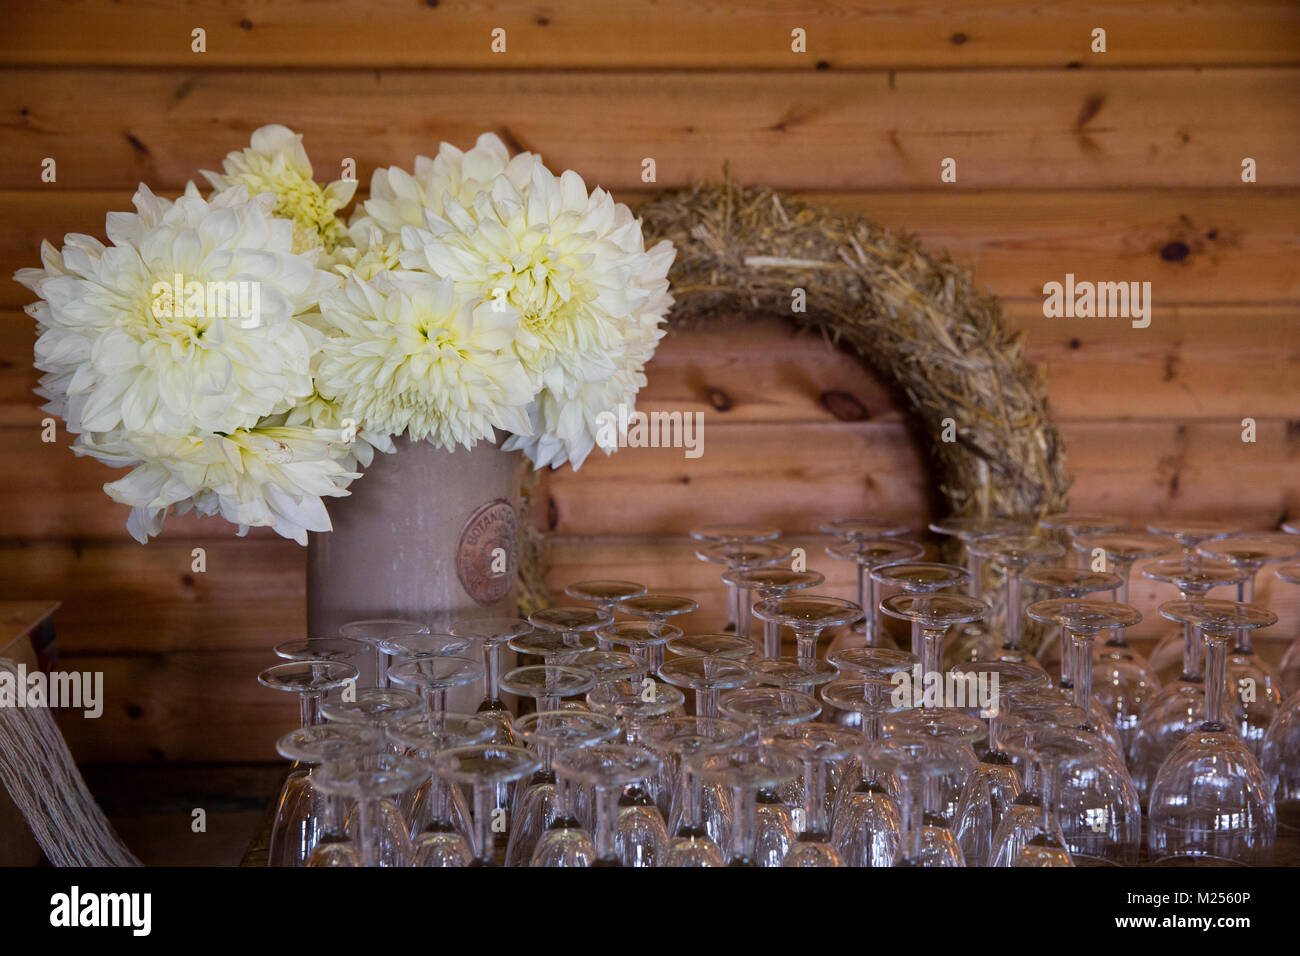 Chrysanthemum flower arrangement and rows of wine glasses Stock Photo